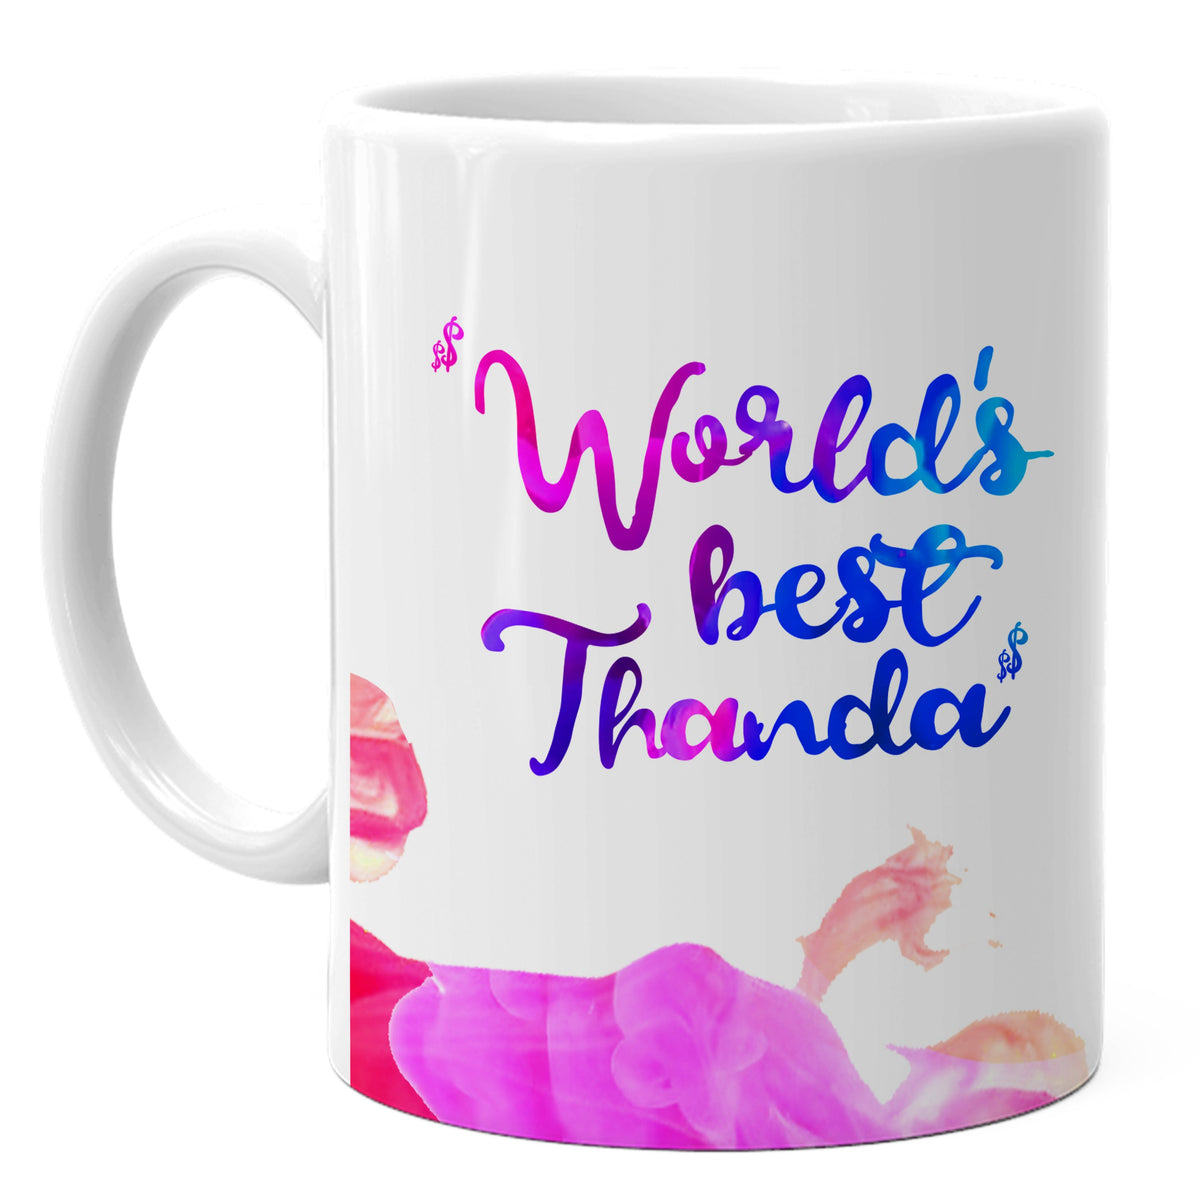 Worlds Best Thandha Mug